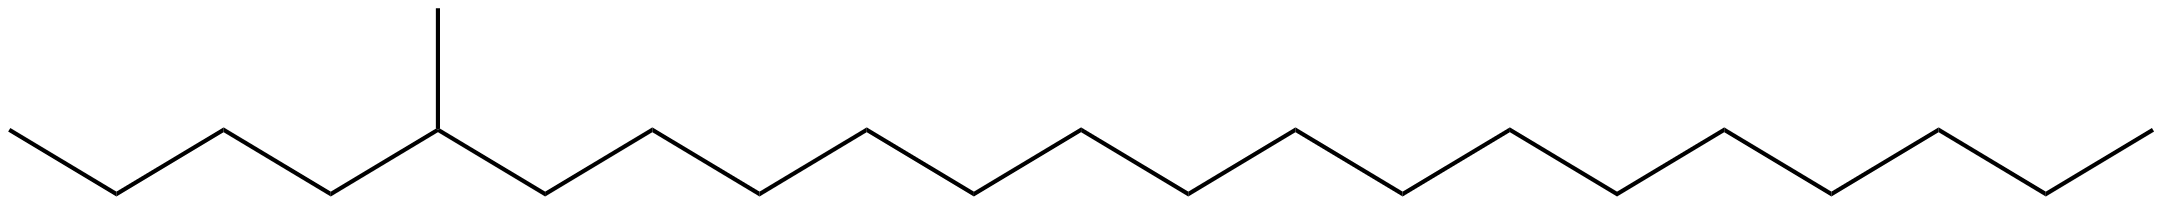 Image of heneicosane, 5-methyl-